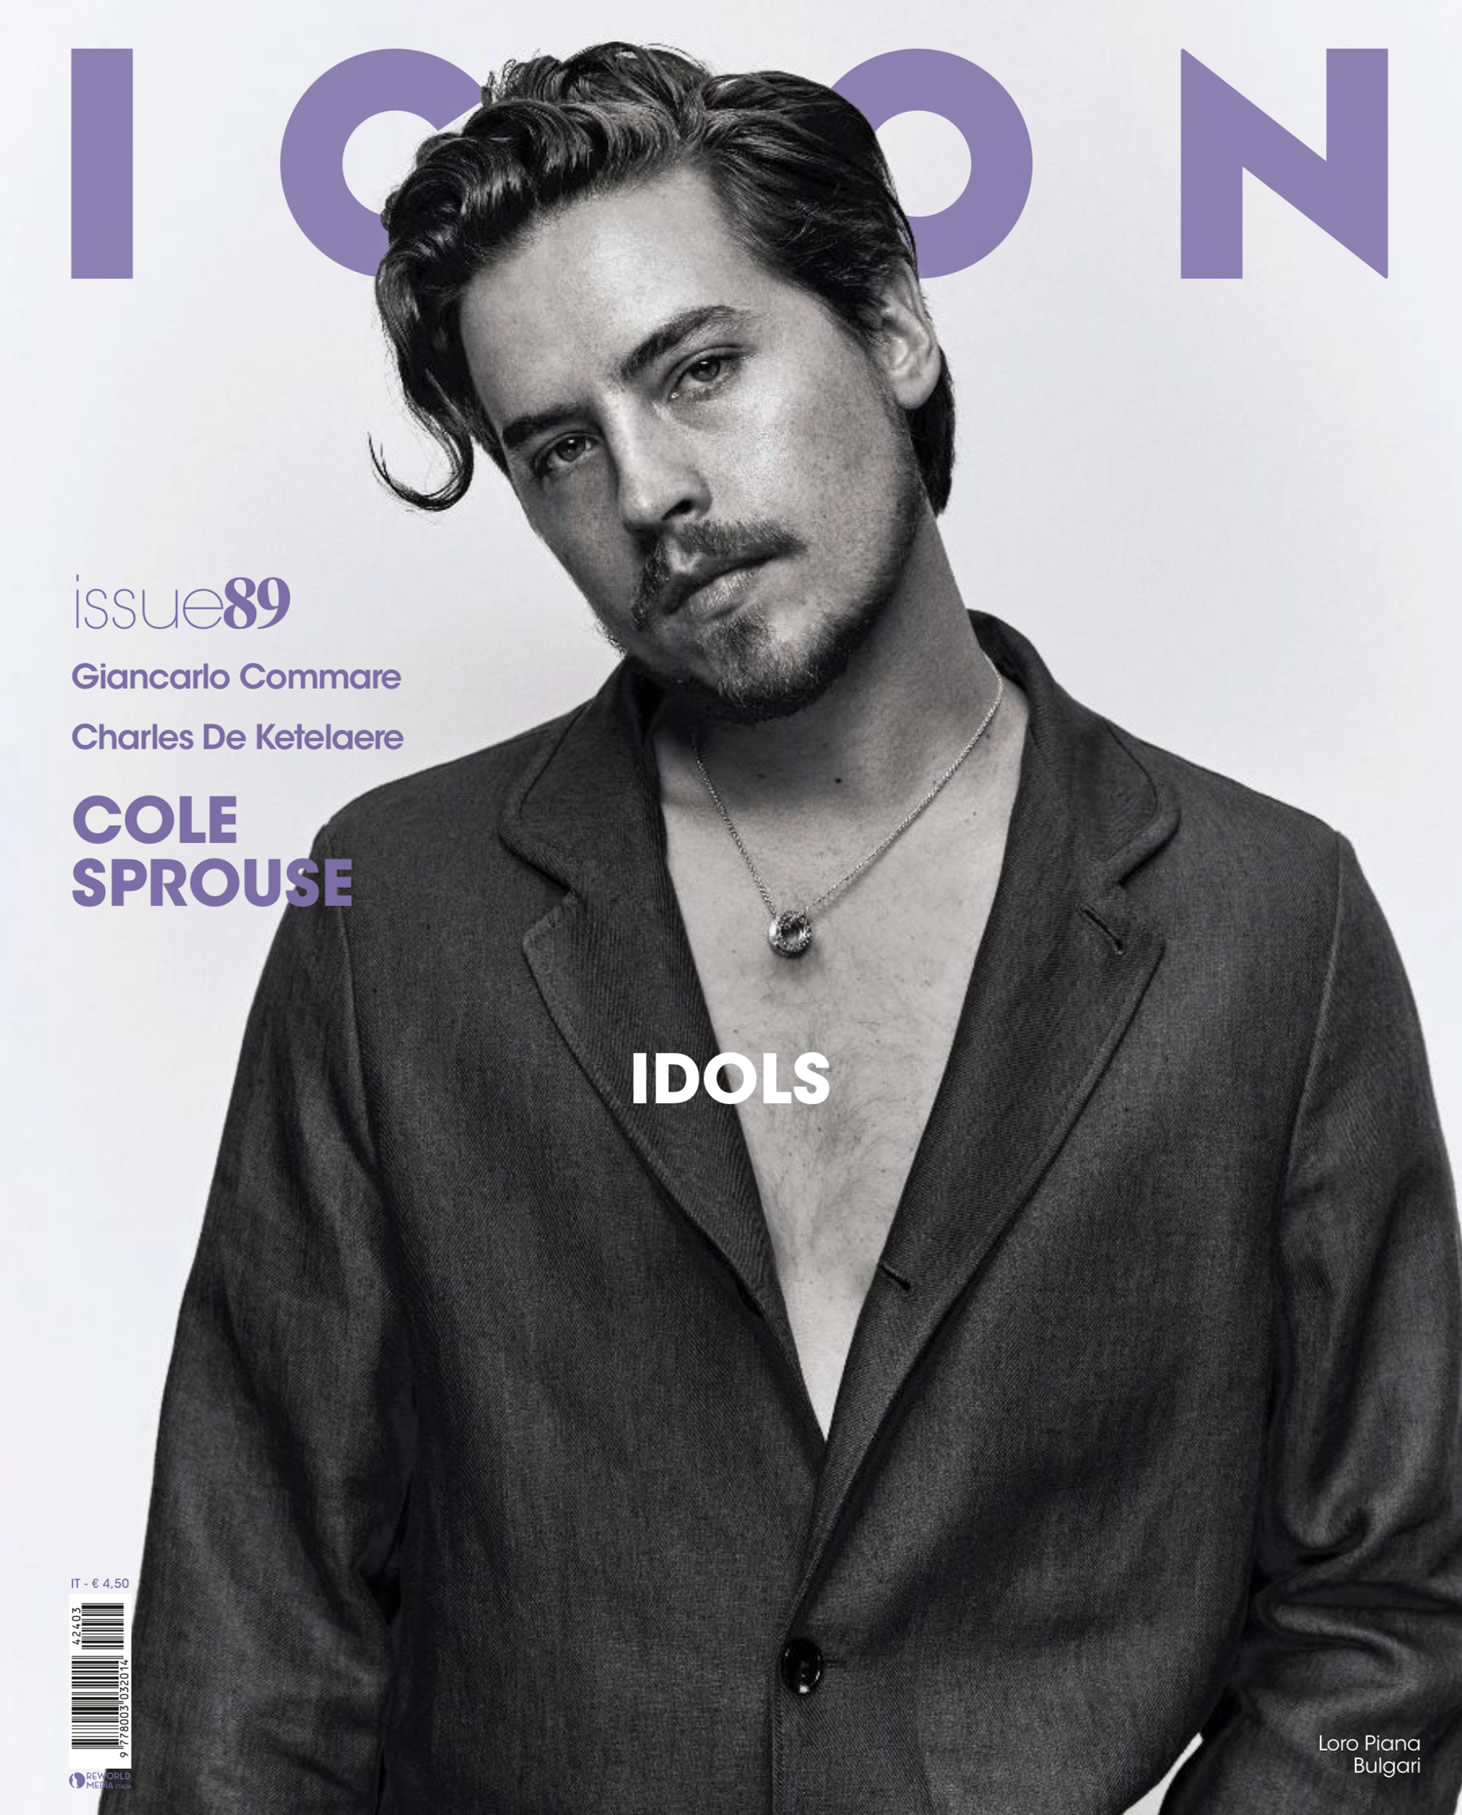 ICON Magazine – Issue89